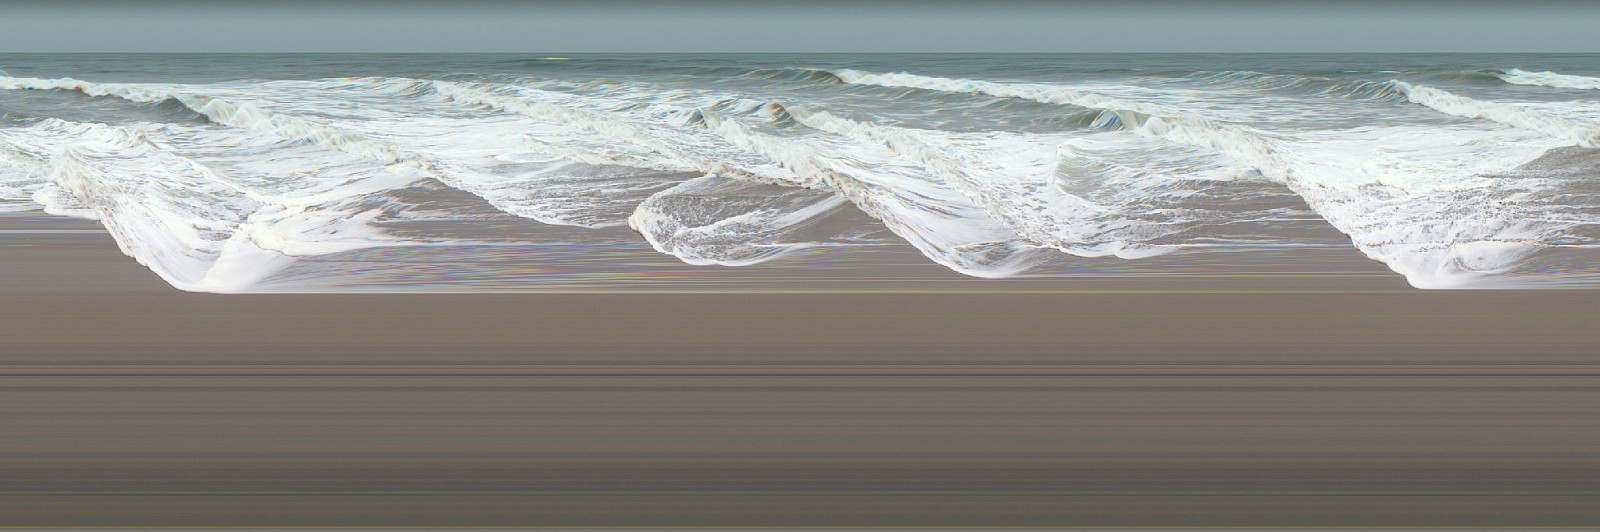 Jay Mark Johnson, STORM AT SEA #6, 2010 Malibu - Ventura CA
archival pigment on paper, mounted on aluminum, 40 x 120 in. (101.6 x 304.8 cm)